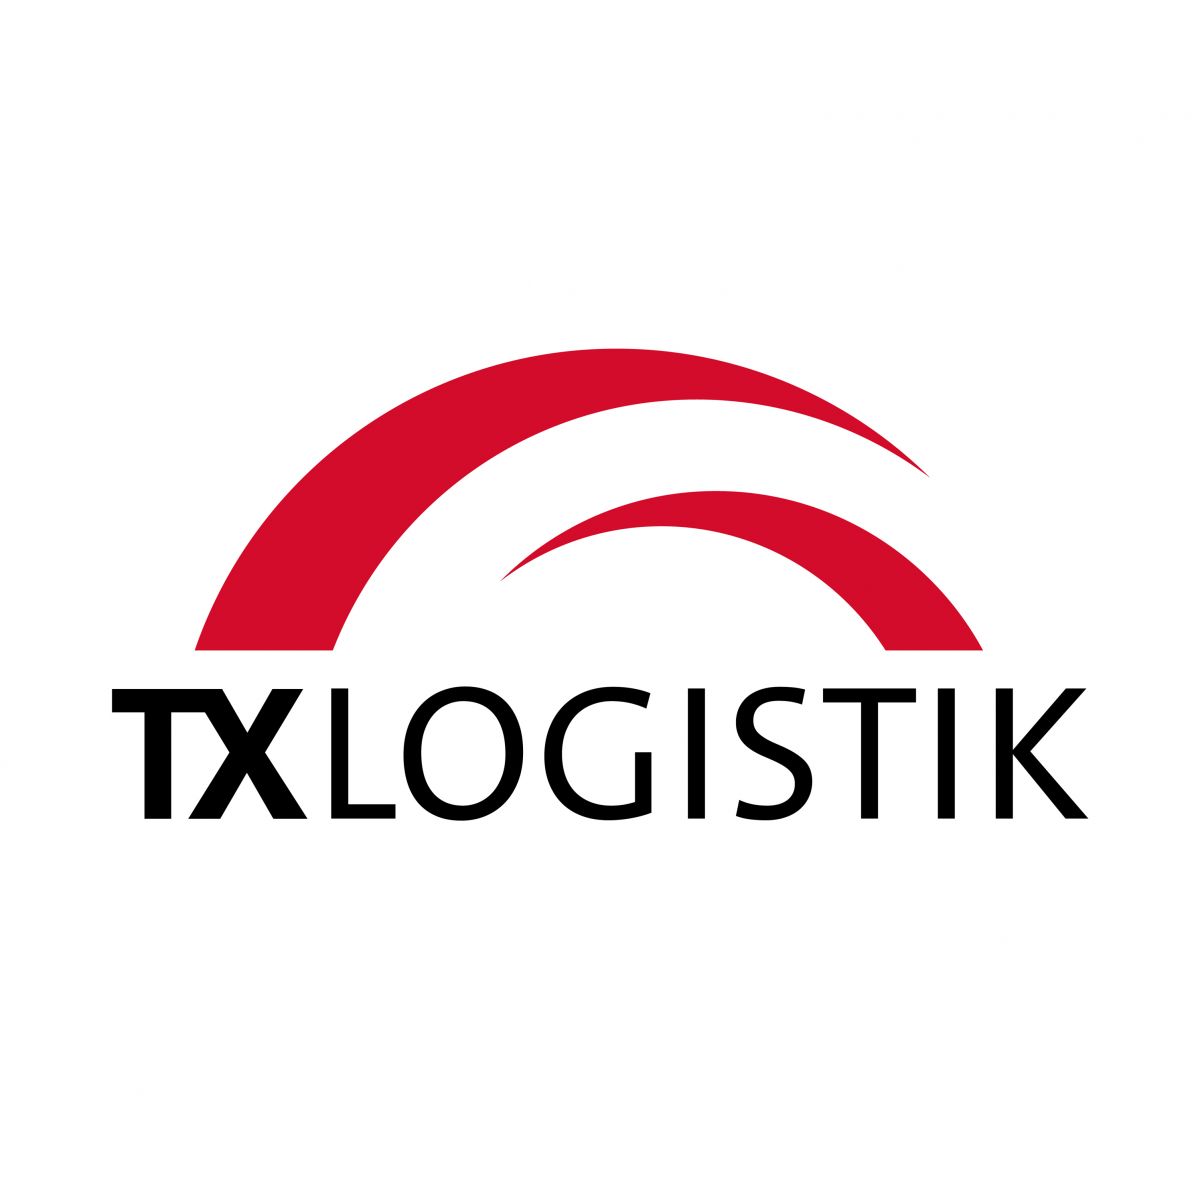 TX Logistik AG neues Mitglied